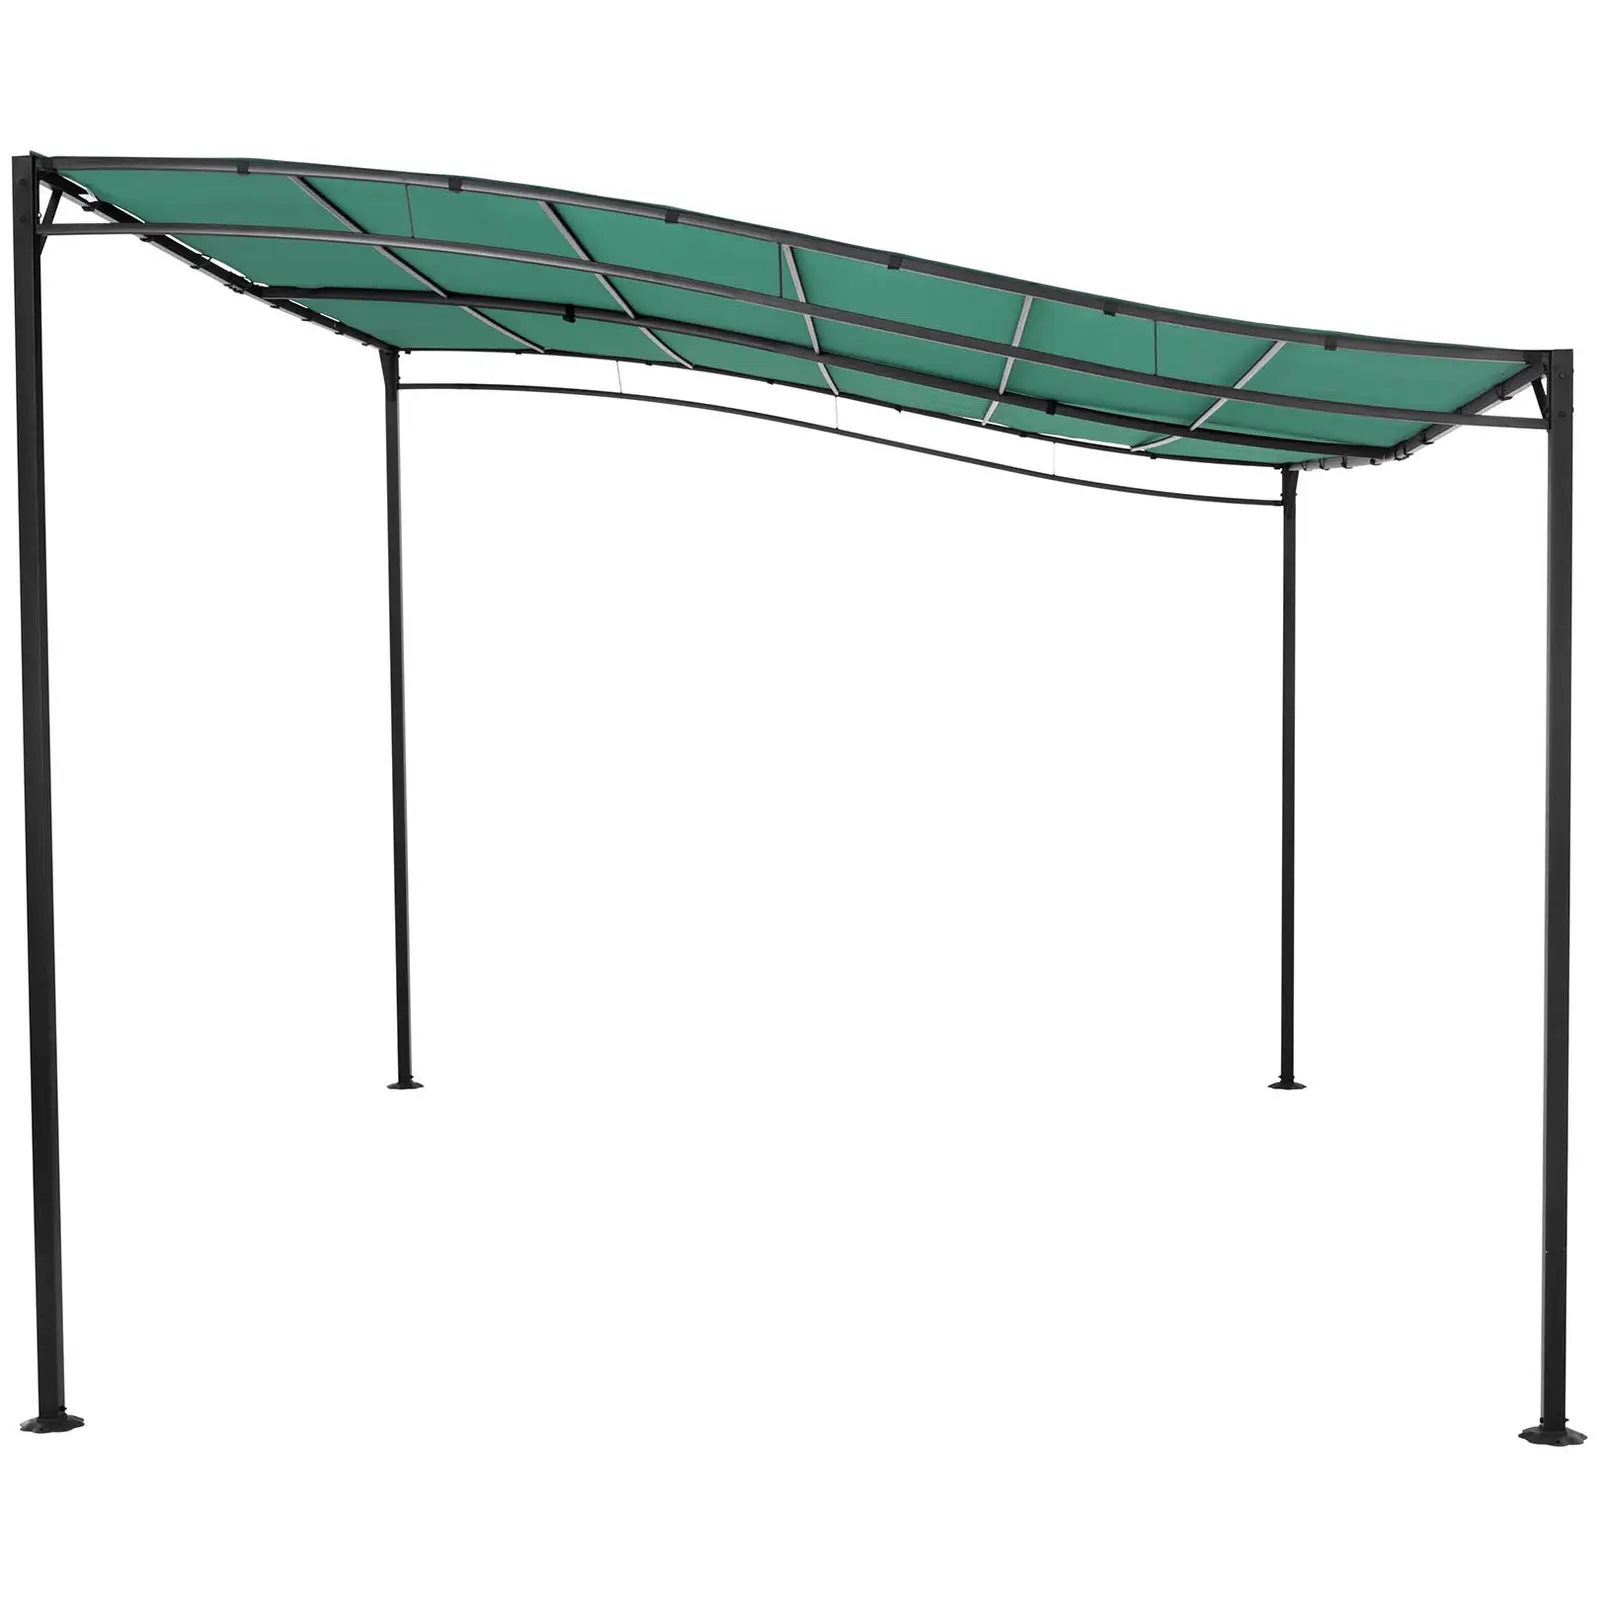 Anbaupavillon - 3 x 4 m - dunkelgrün